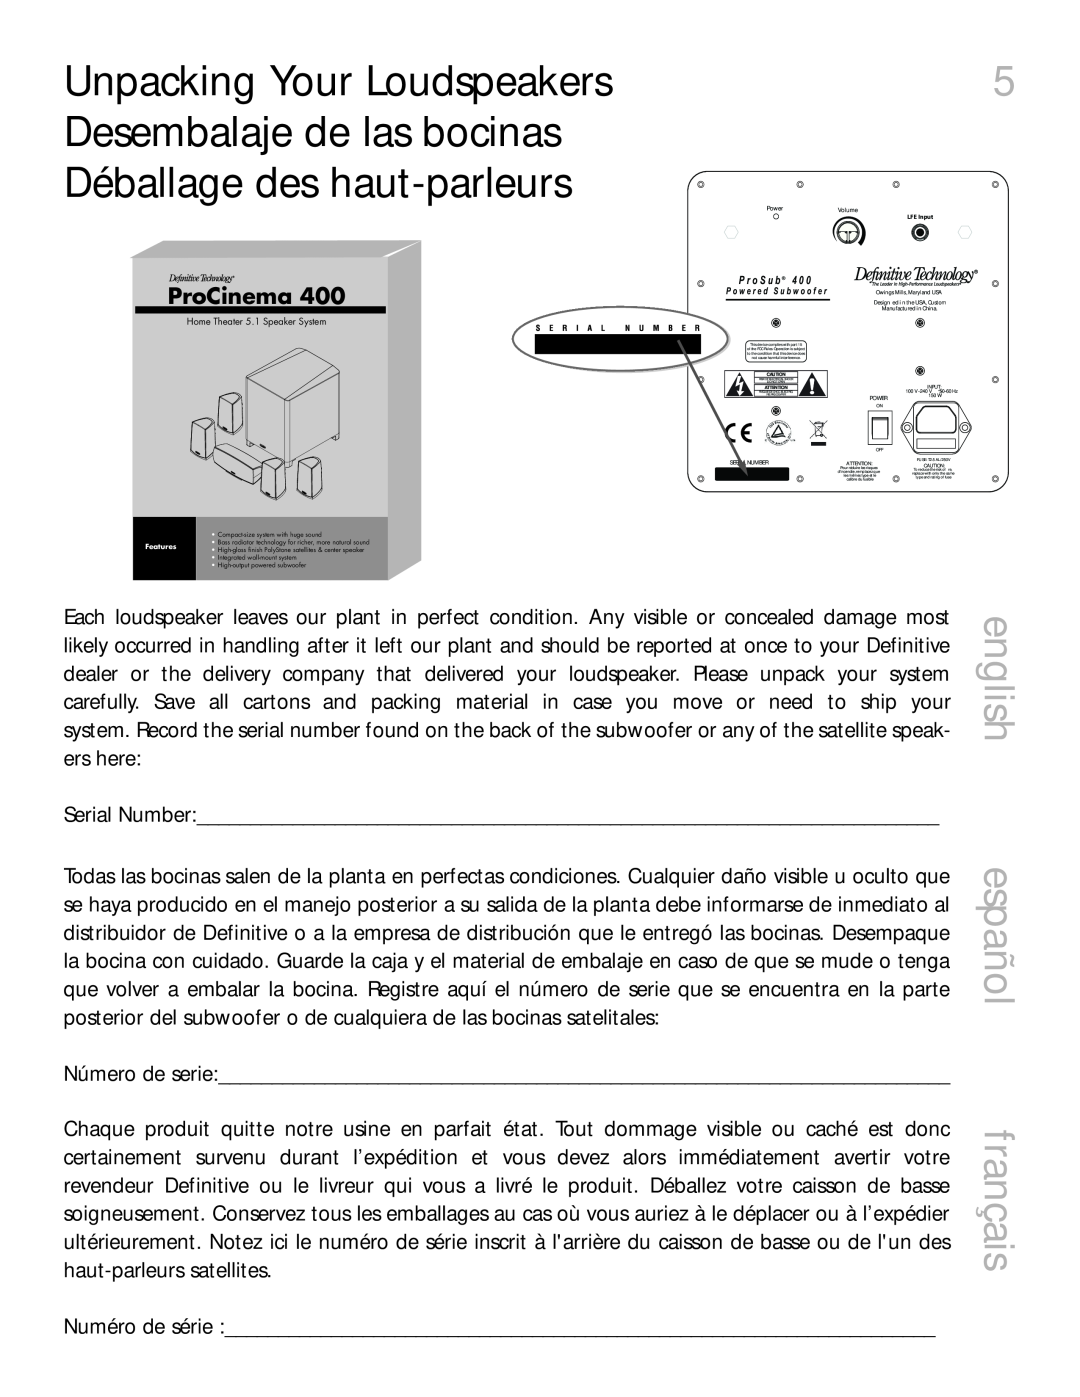 Definitive Technology 400 owner manual english español français, ProCinema 